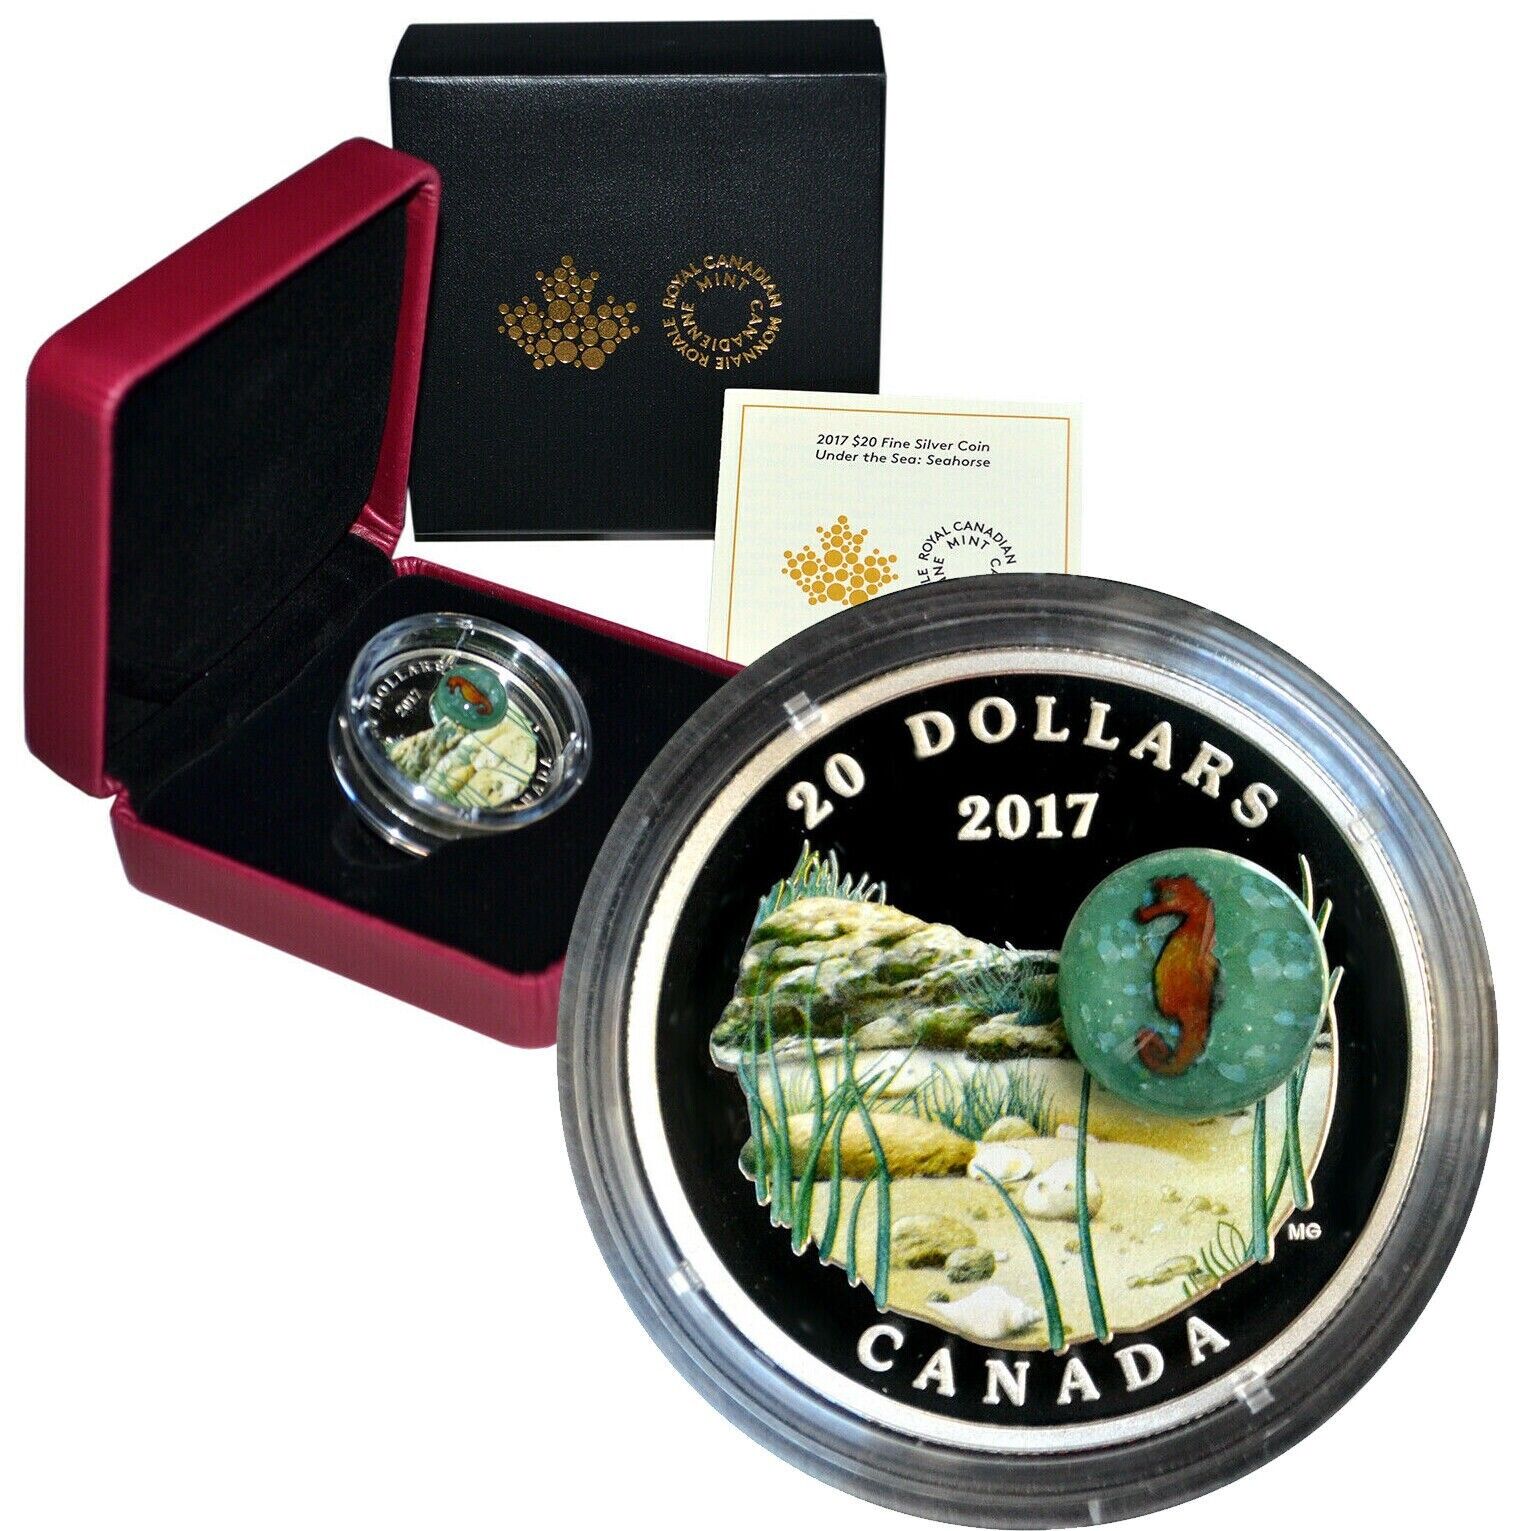 31.39g Silver Coin 2017 Canada $20 Murrini Glass Proof Under the Sea - Seahorse-classypw.com-10